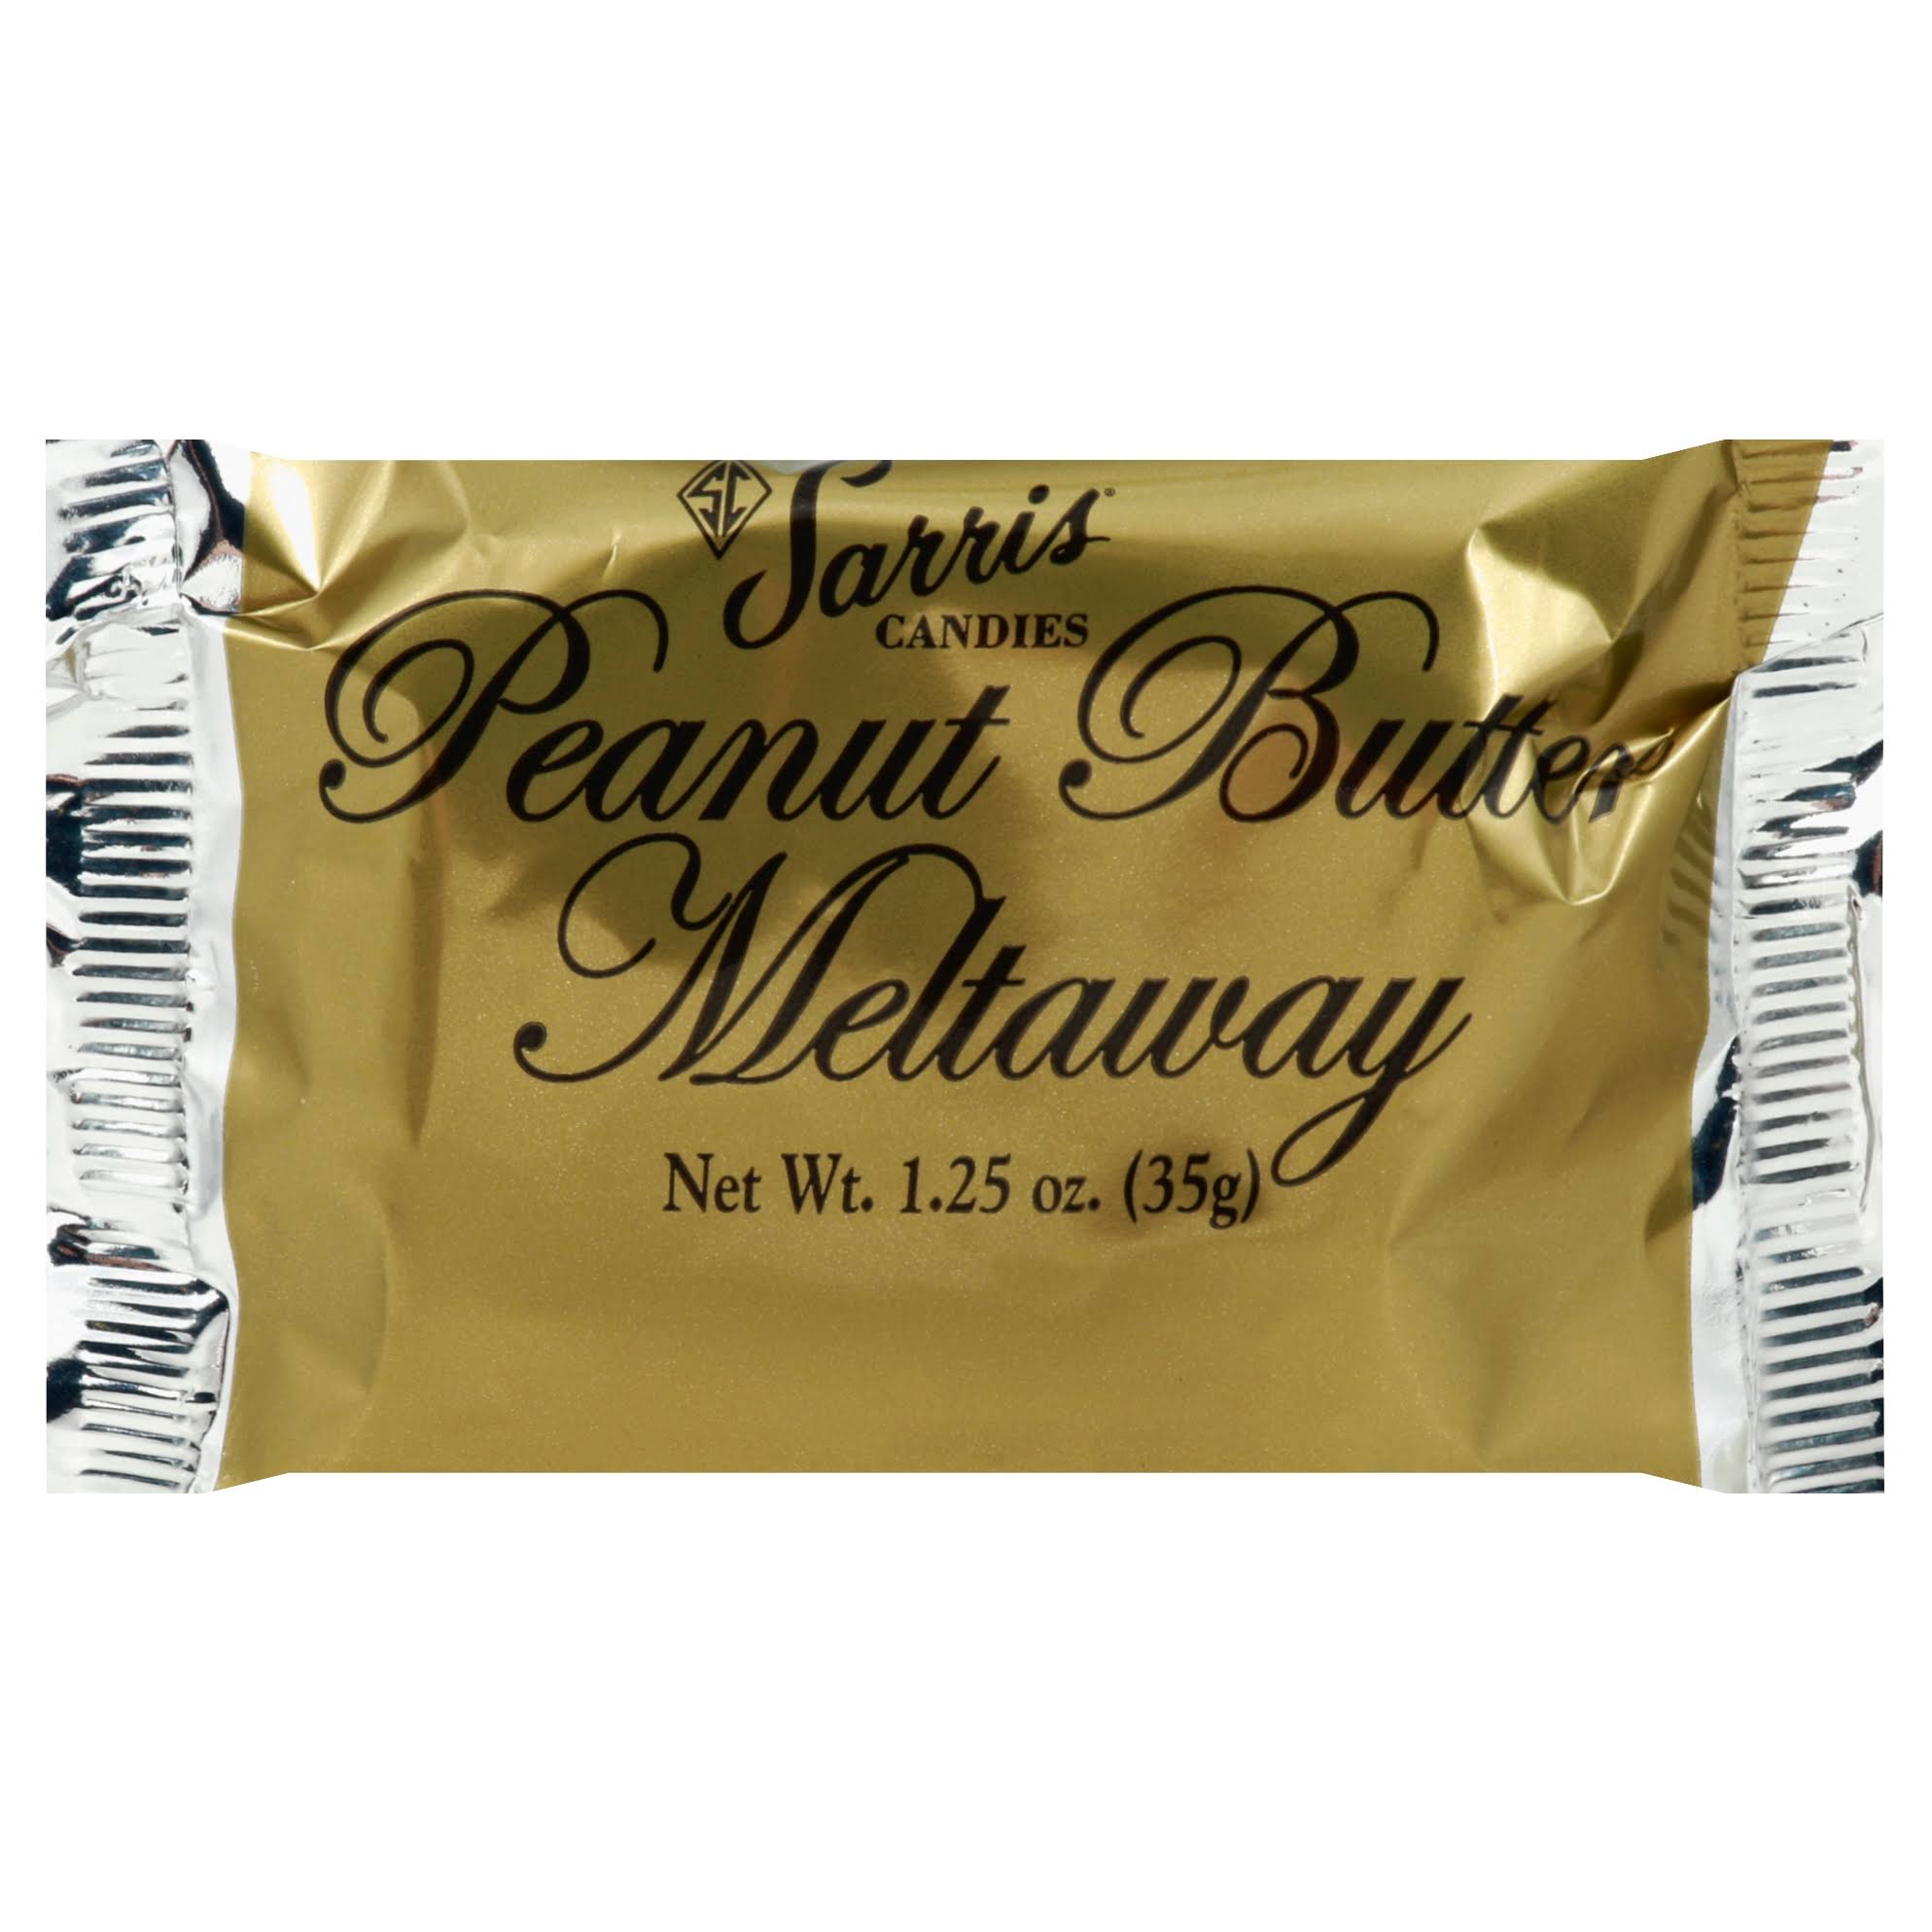 Sarris Candies Meltaway, Peanut Butter - 1.25 oz